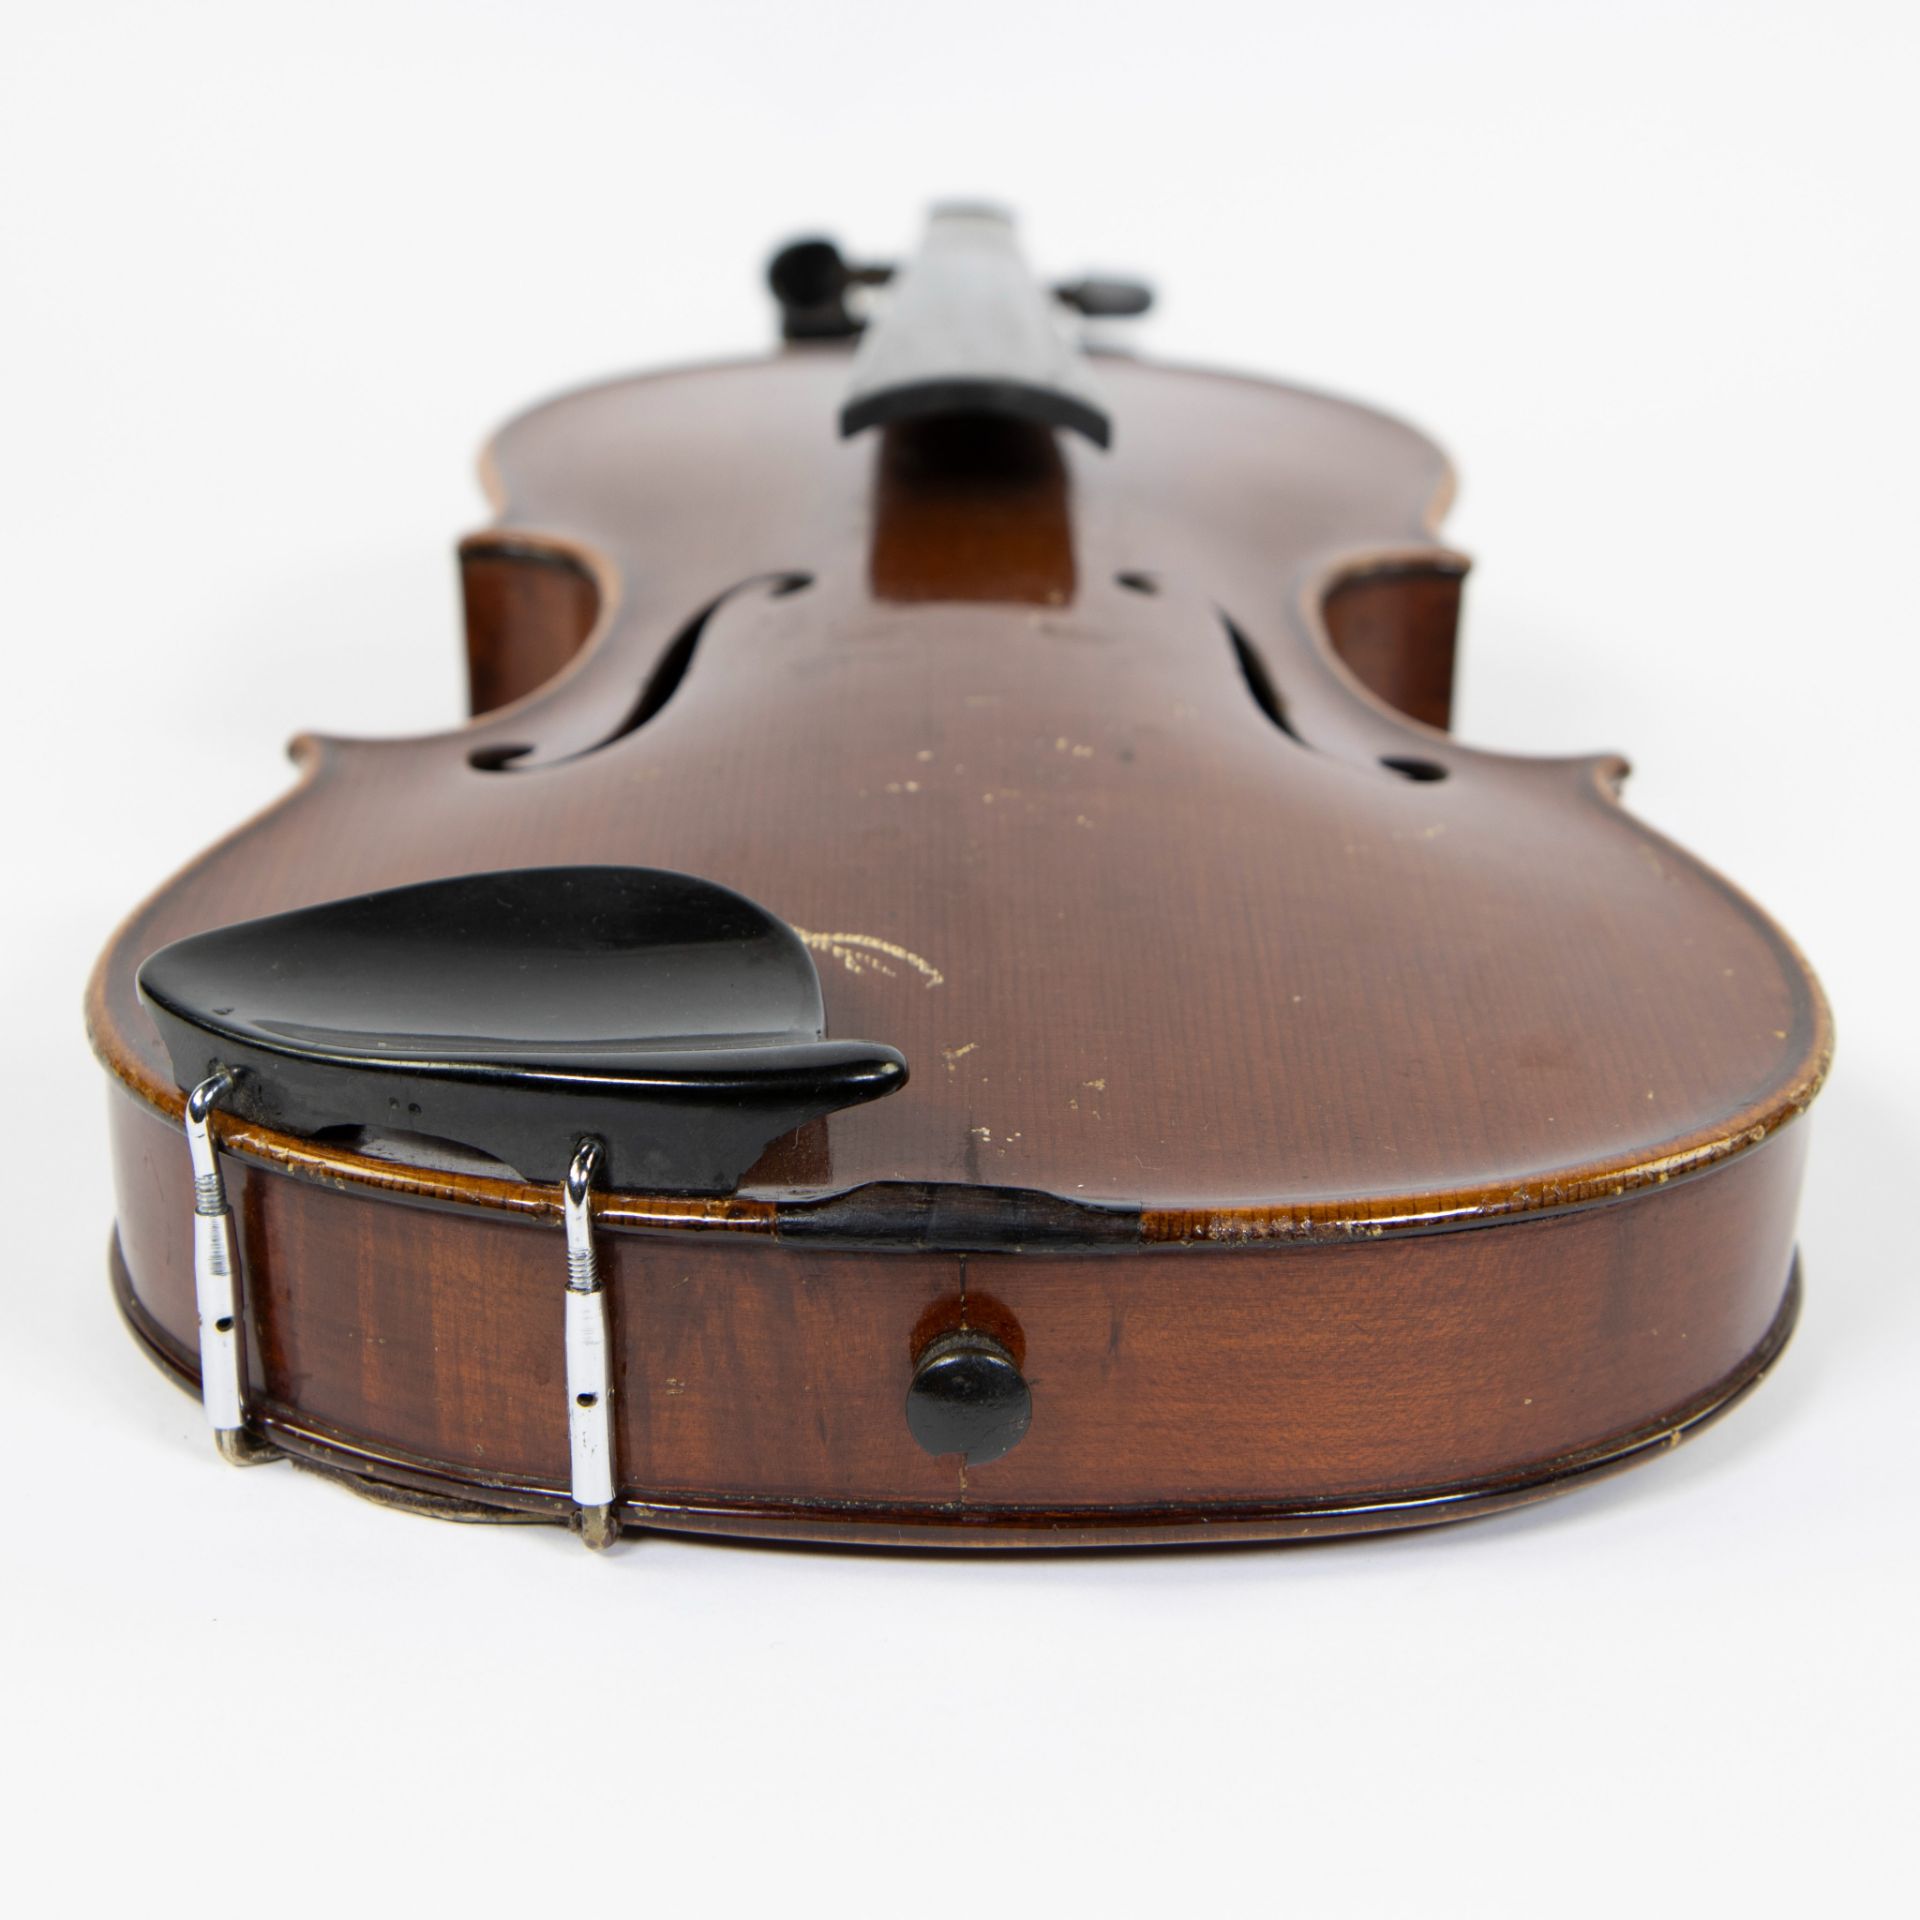 Violin no label, 361mm, wooden case - Image 5 of 5